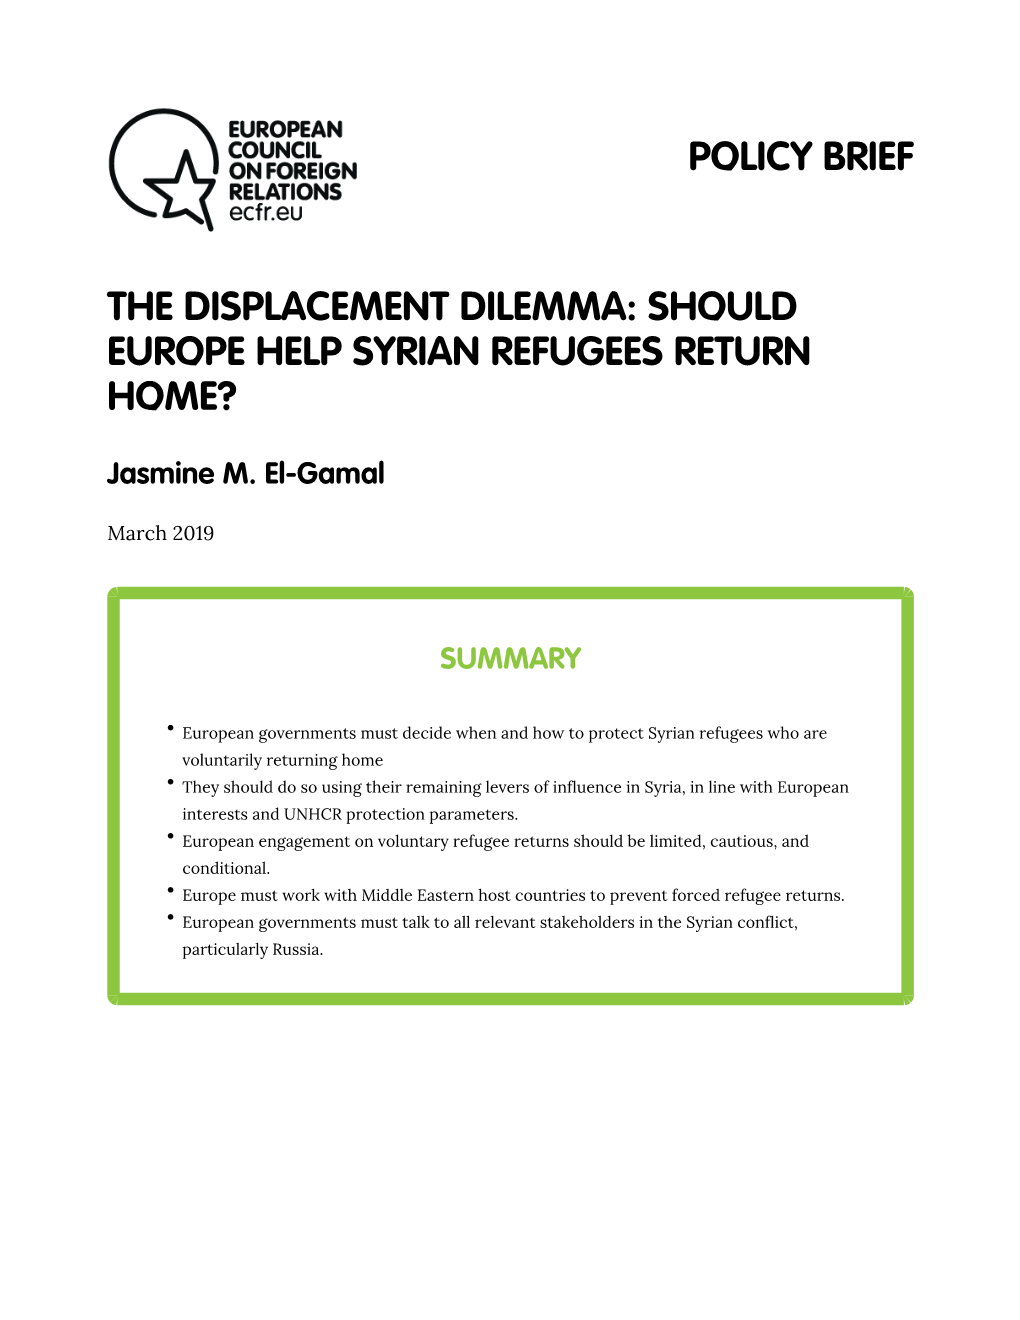 Should Europe Help Syrian Refugees Return Home?